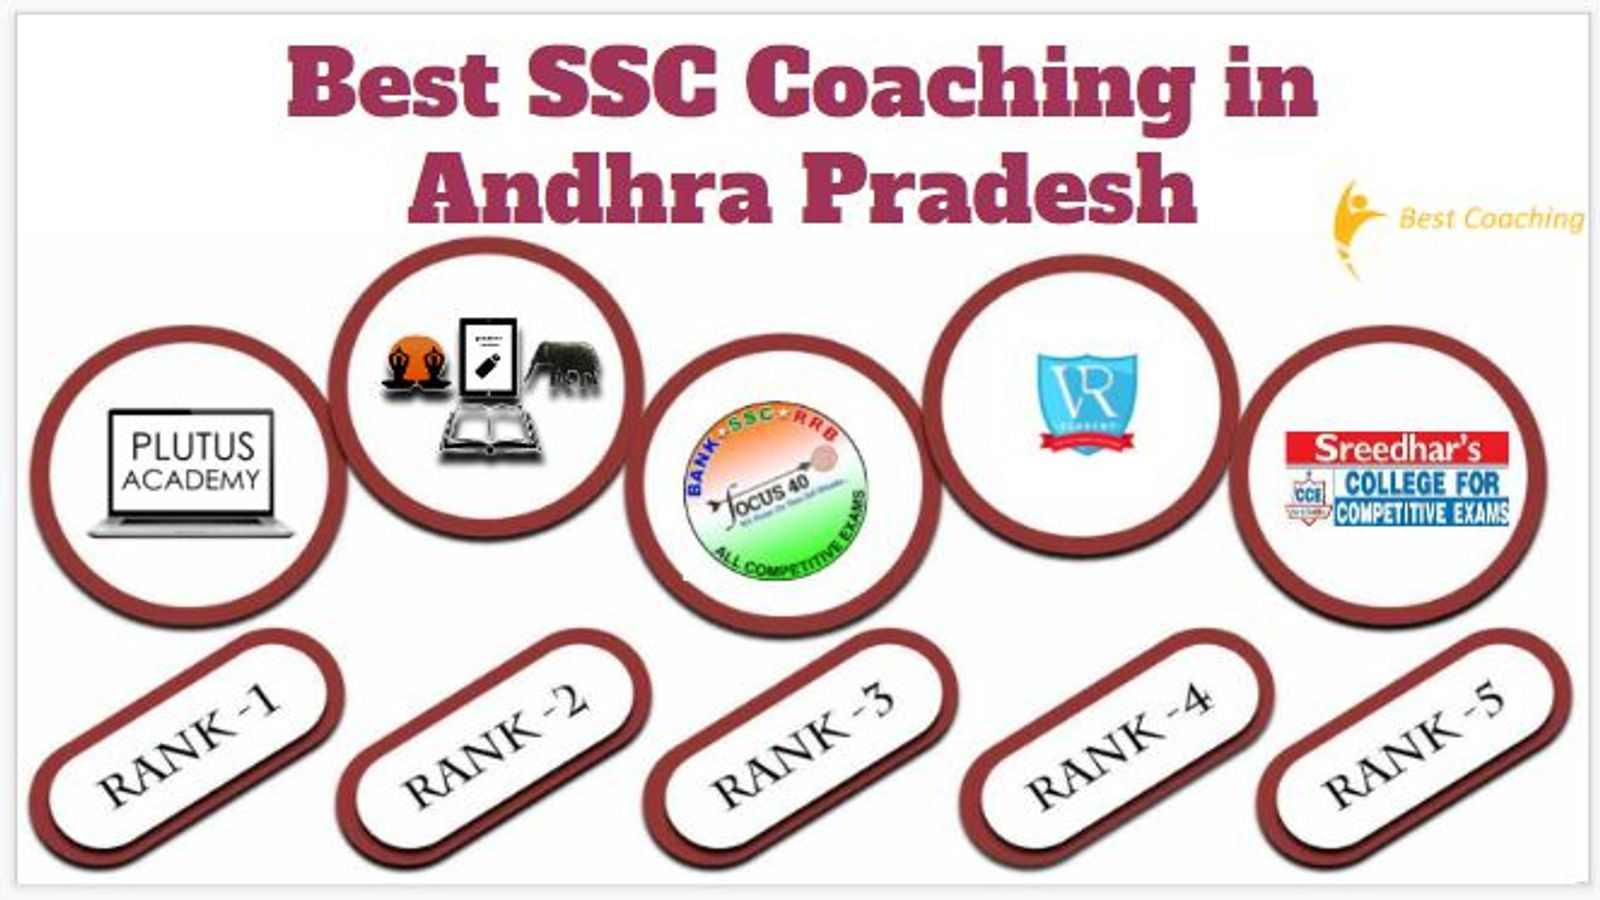 Best SSC Coaching in Andhra Pradesh